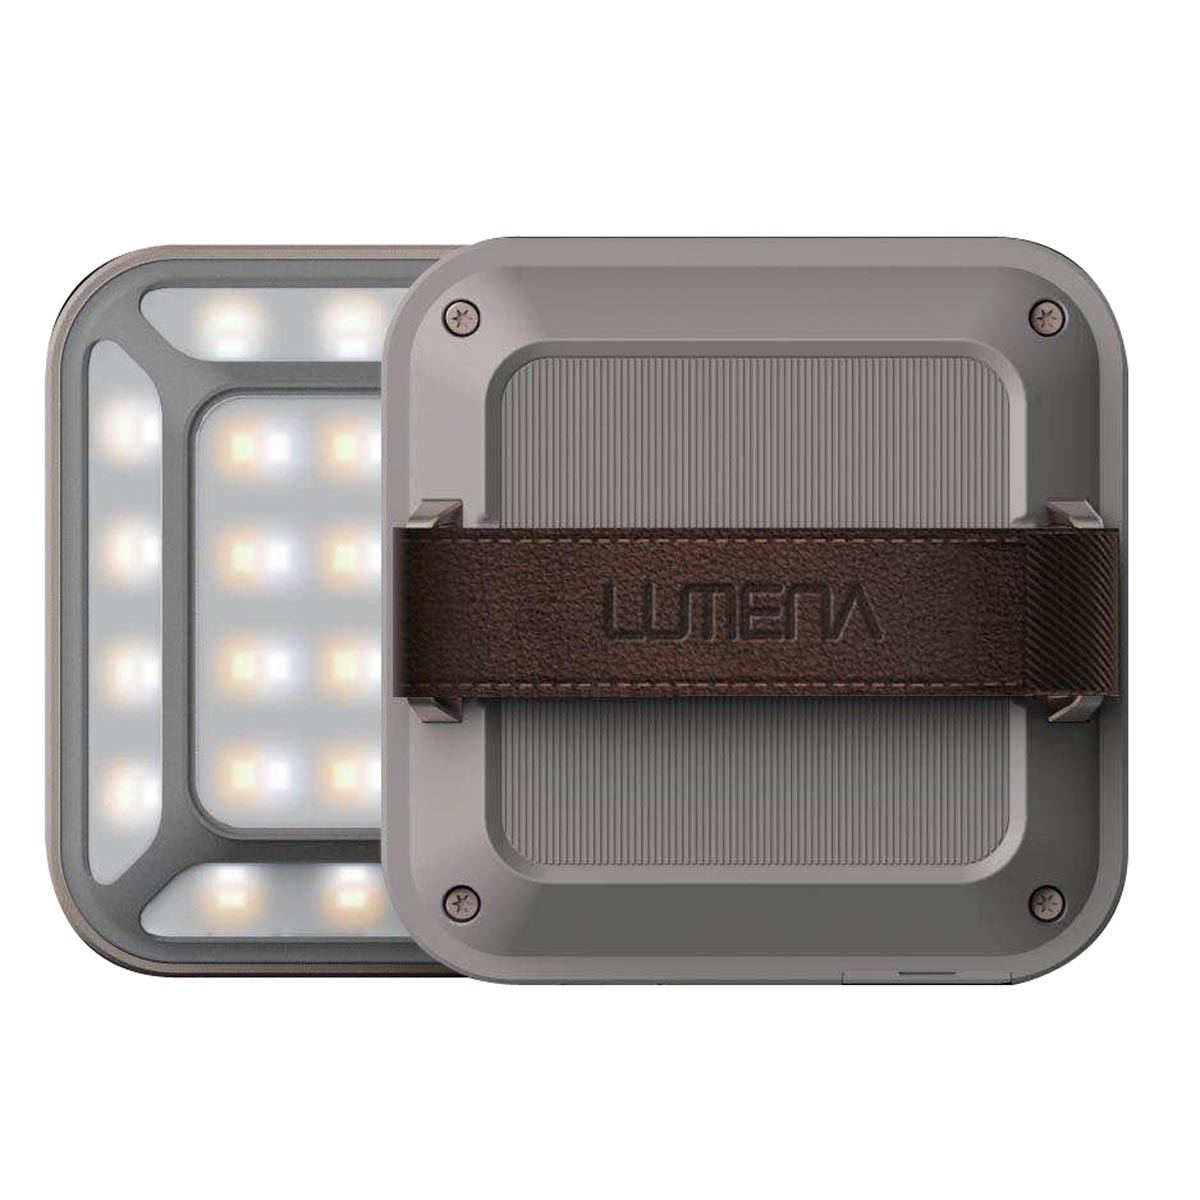 LUMENA 5.1CH Mini 迷你戶外LED燈（時尚黑色 / 粘土米色）